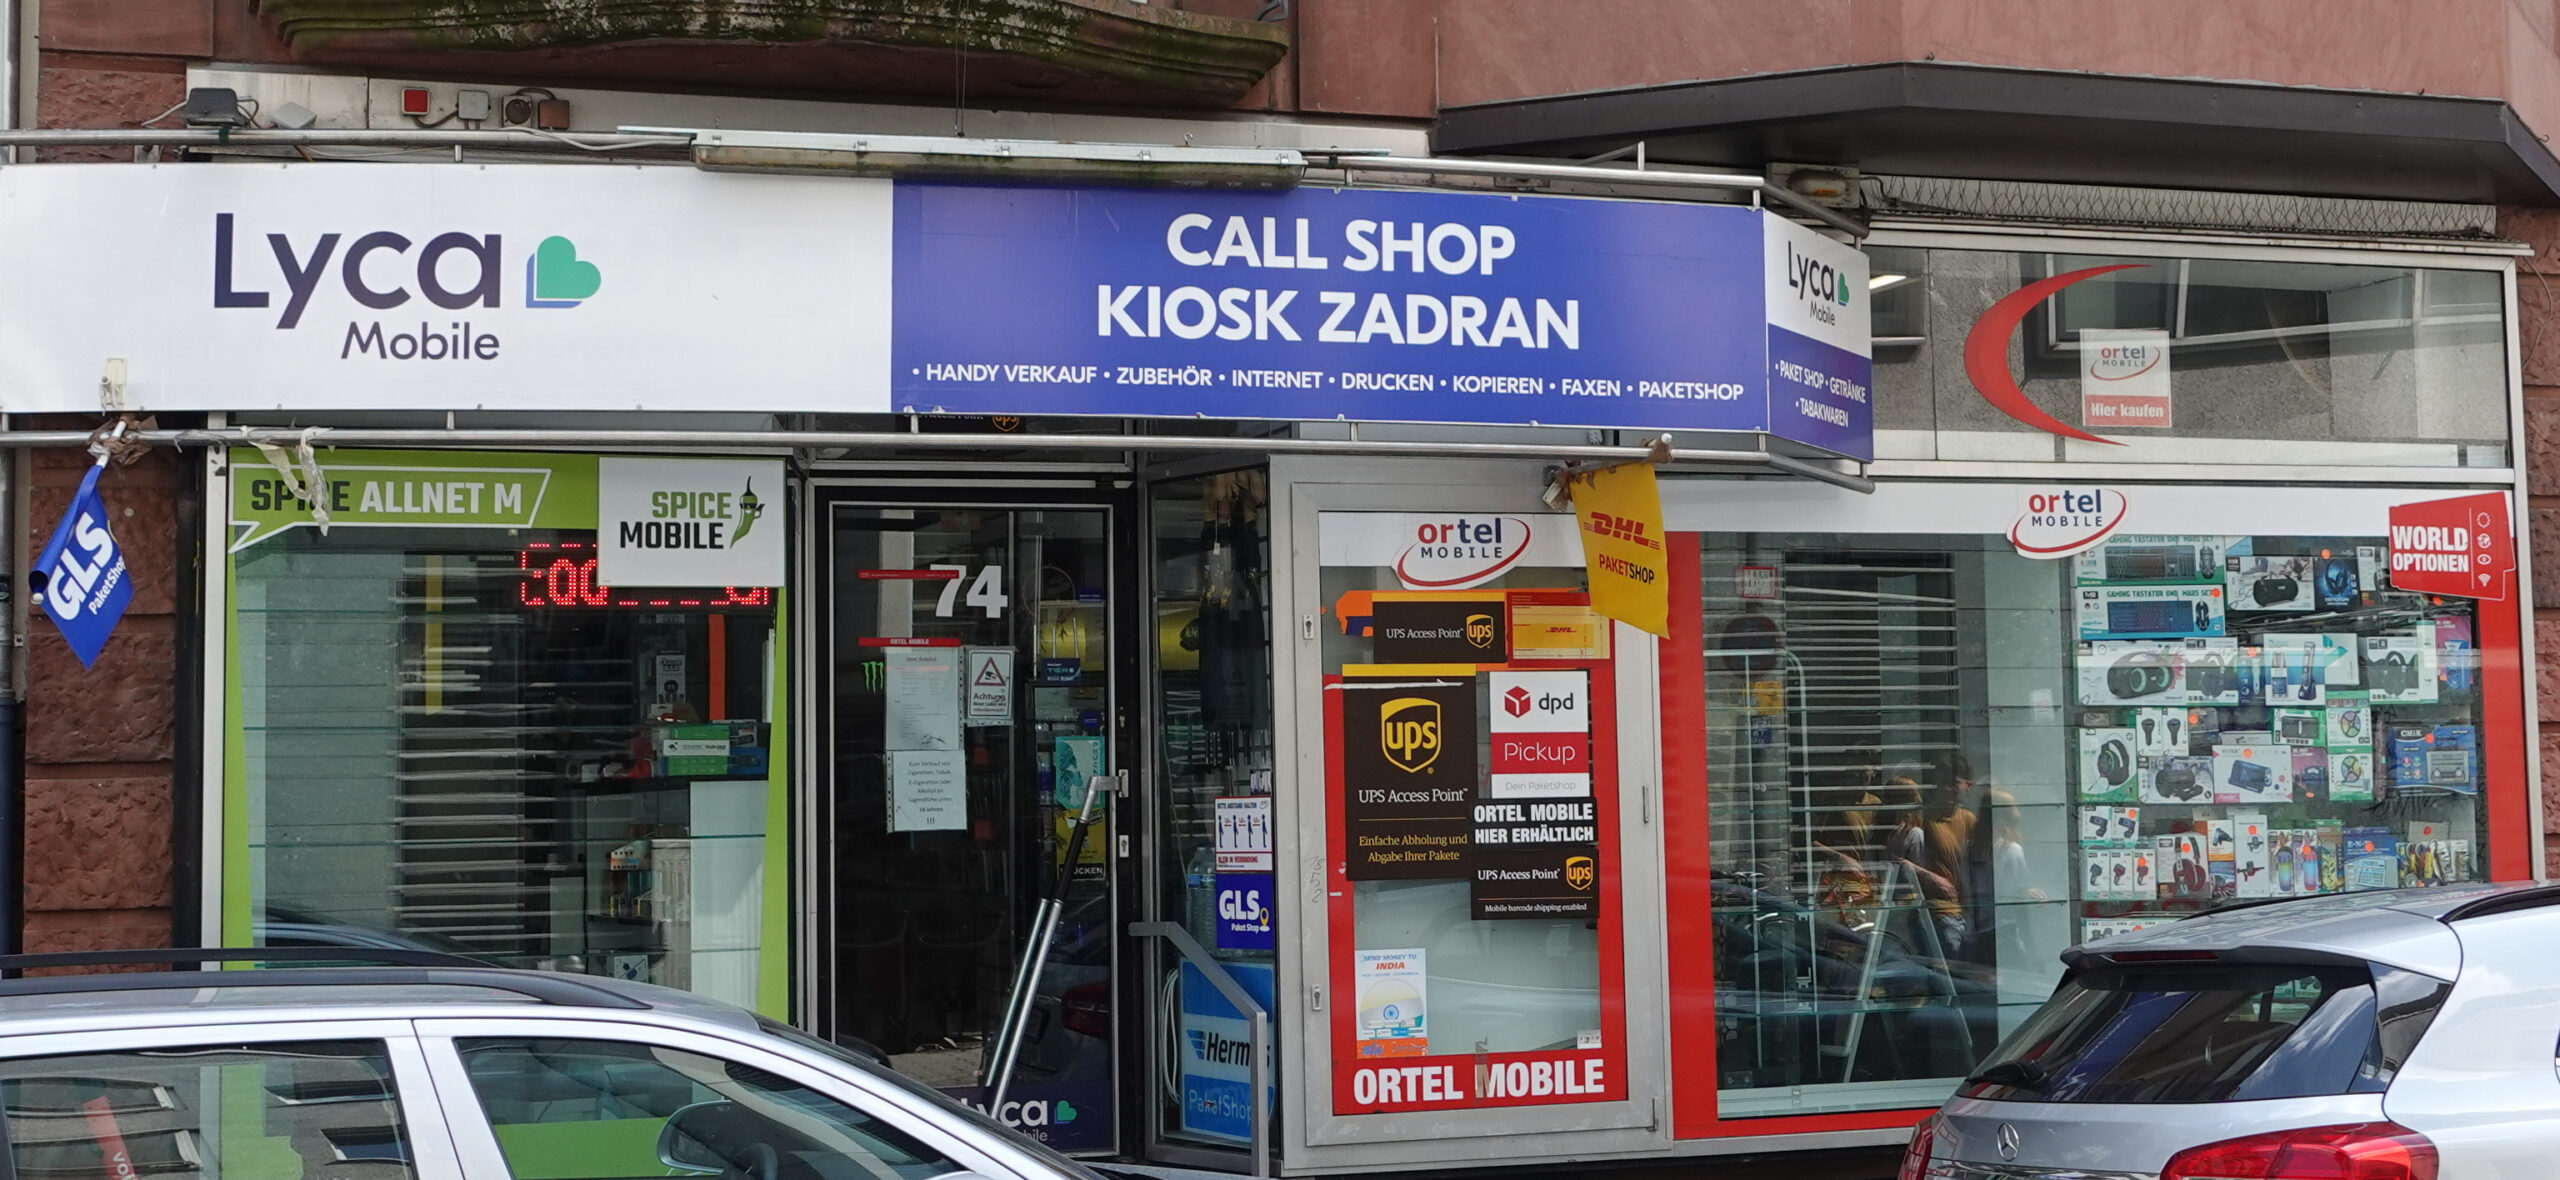 Zadran Kiosk Call Shop